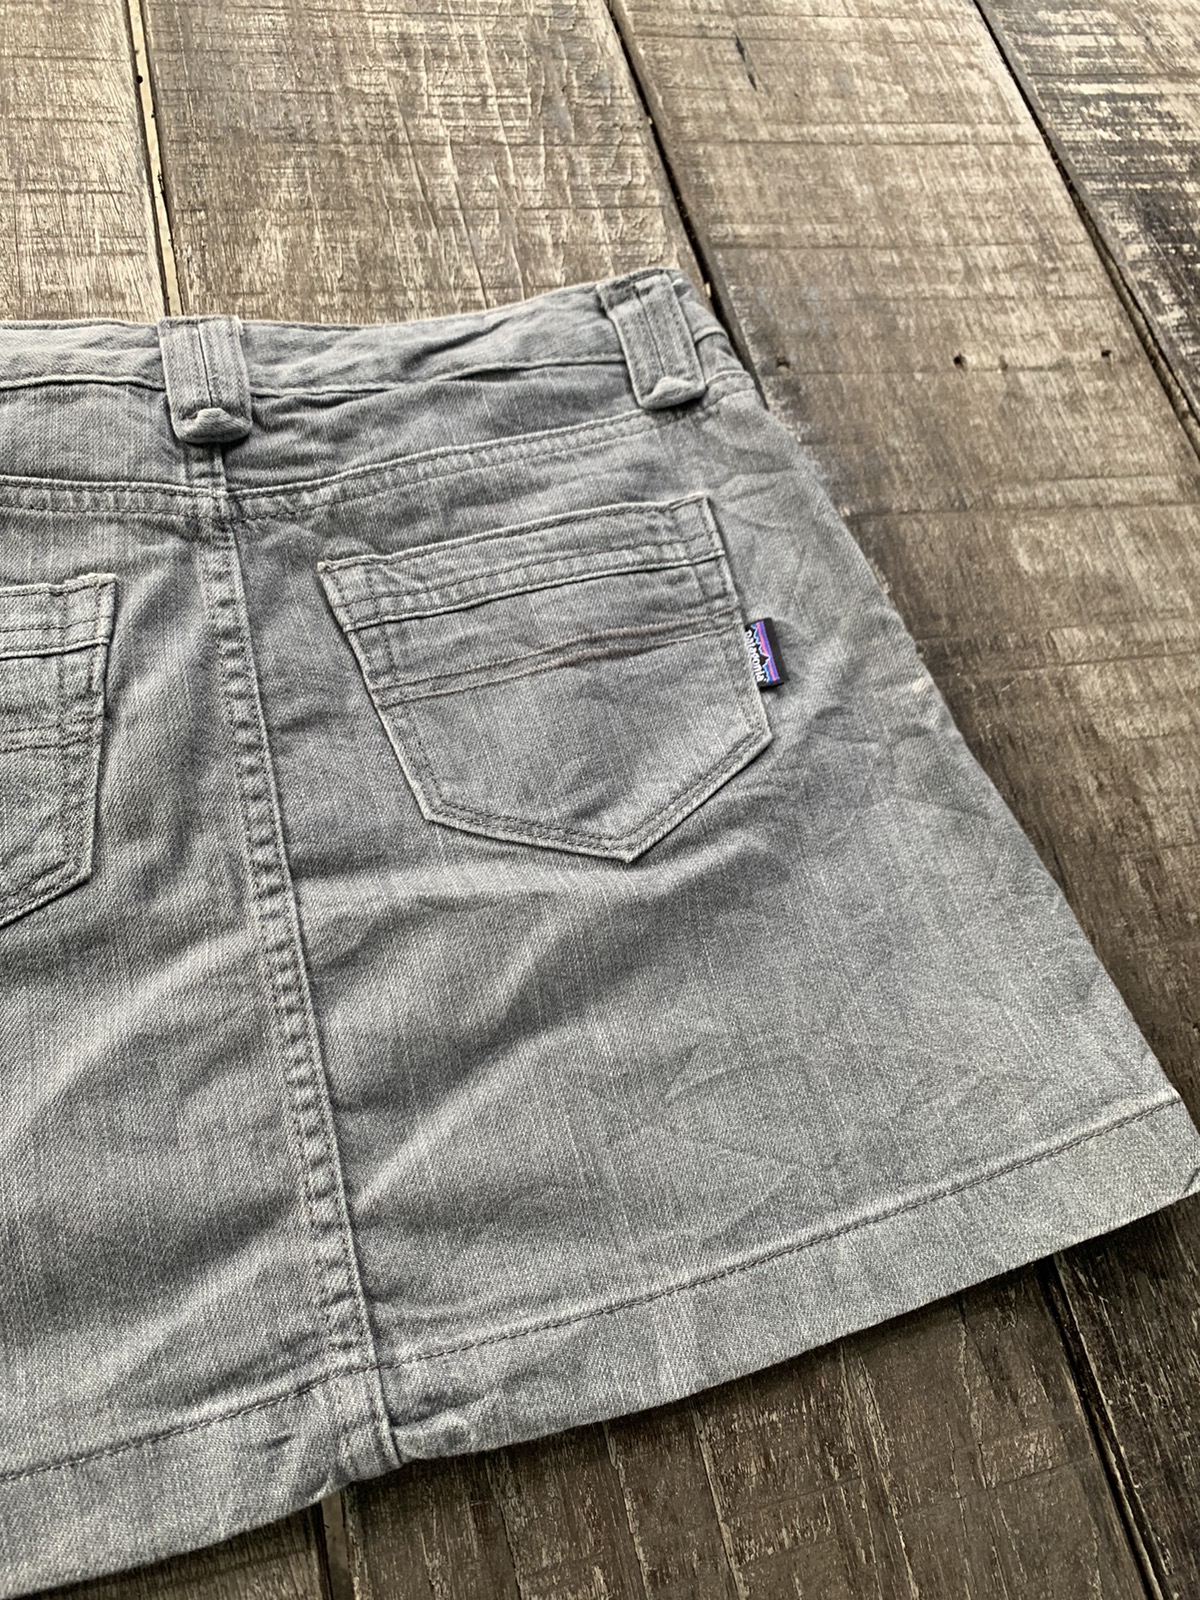 Patagonia jeans mini skirt - 3